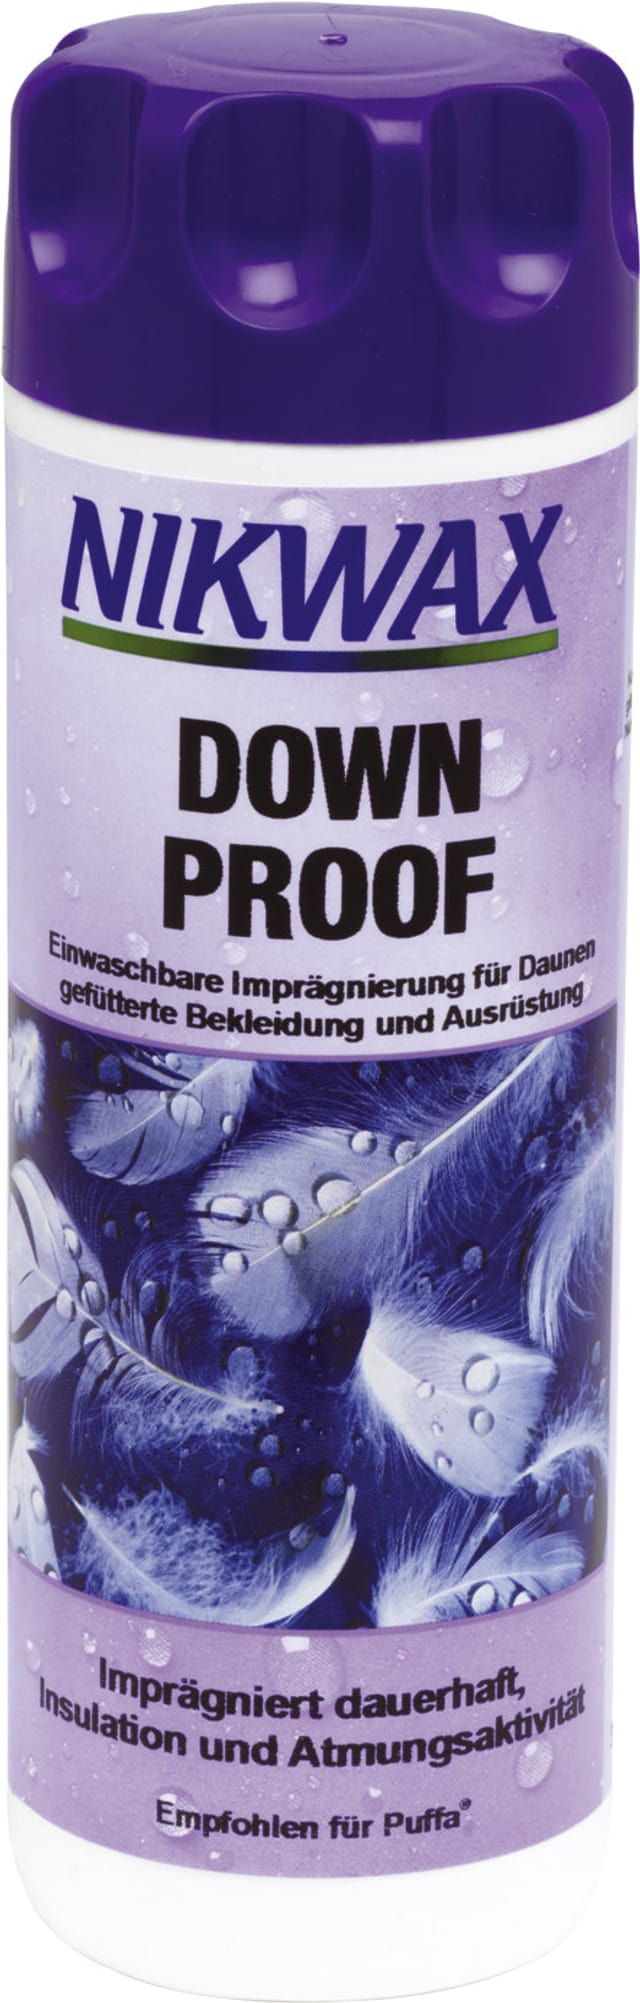 nikwax Down Proof 300 ml Waschmittel